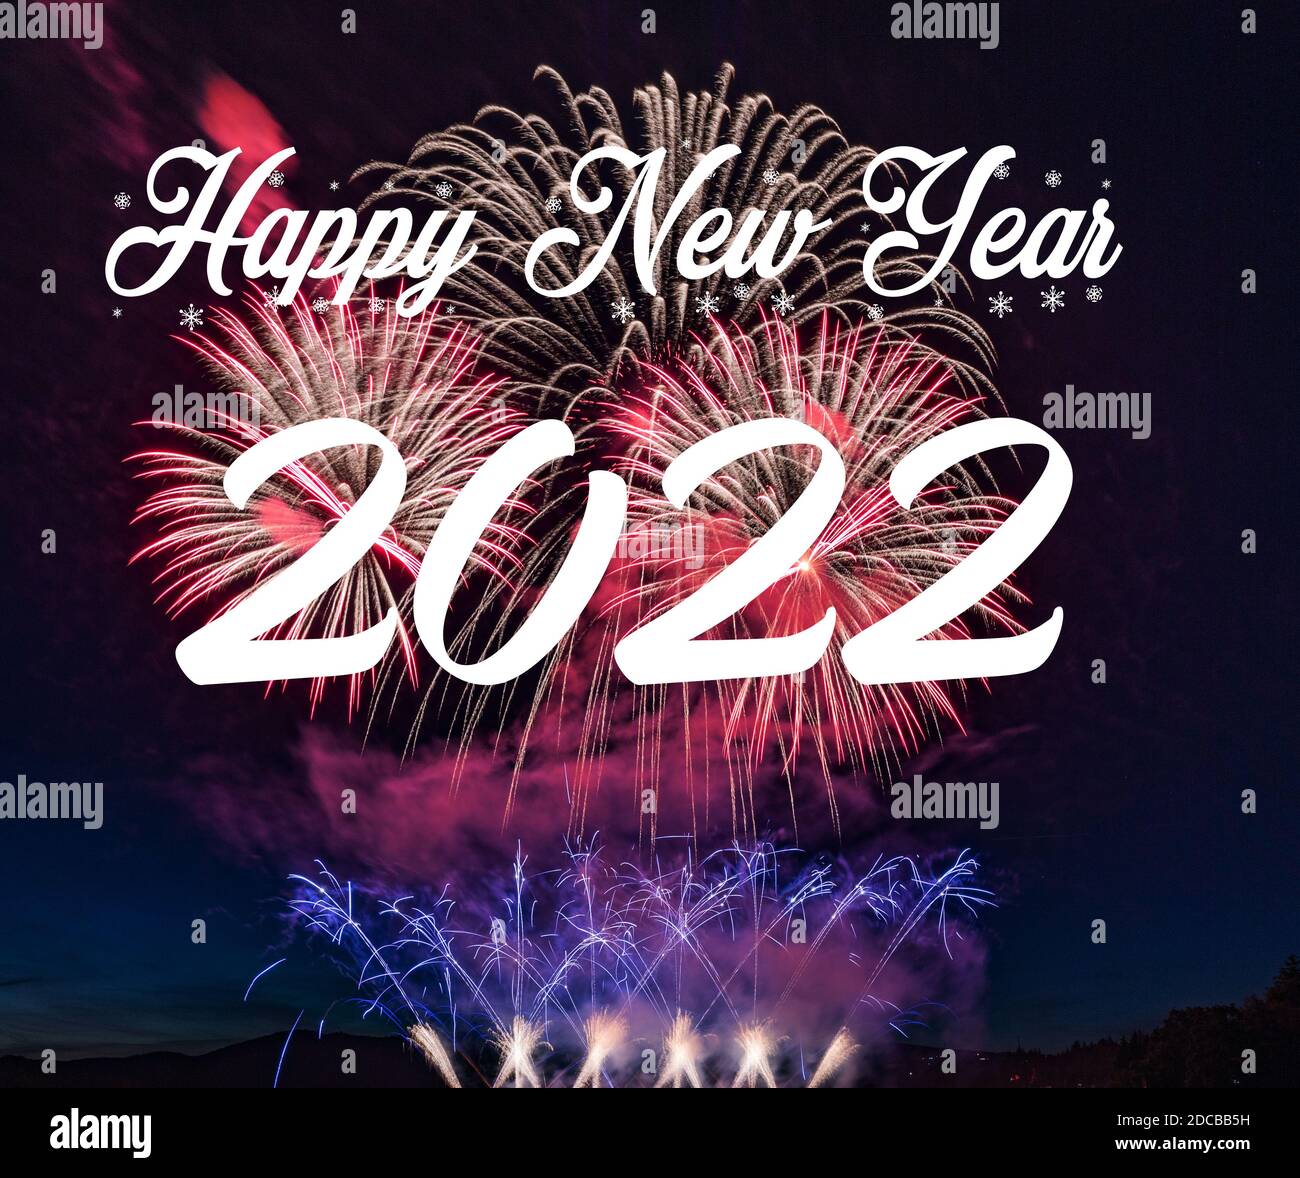 Happy new year 2022 with fireworks background. Celebration New Year 2022 Stock Photo